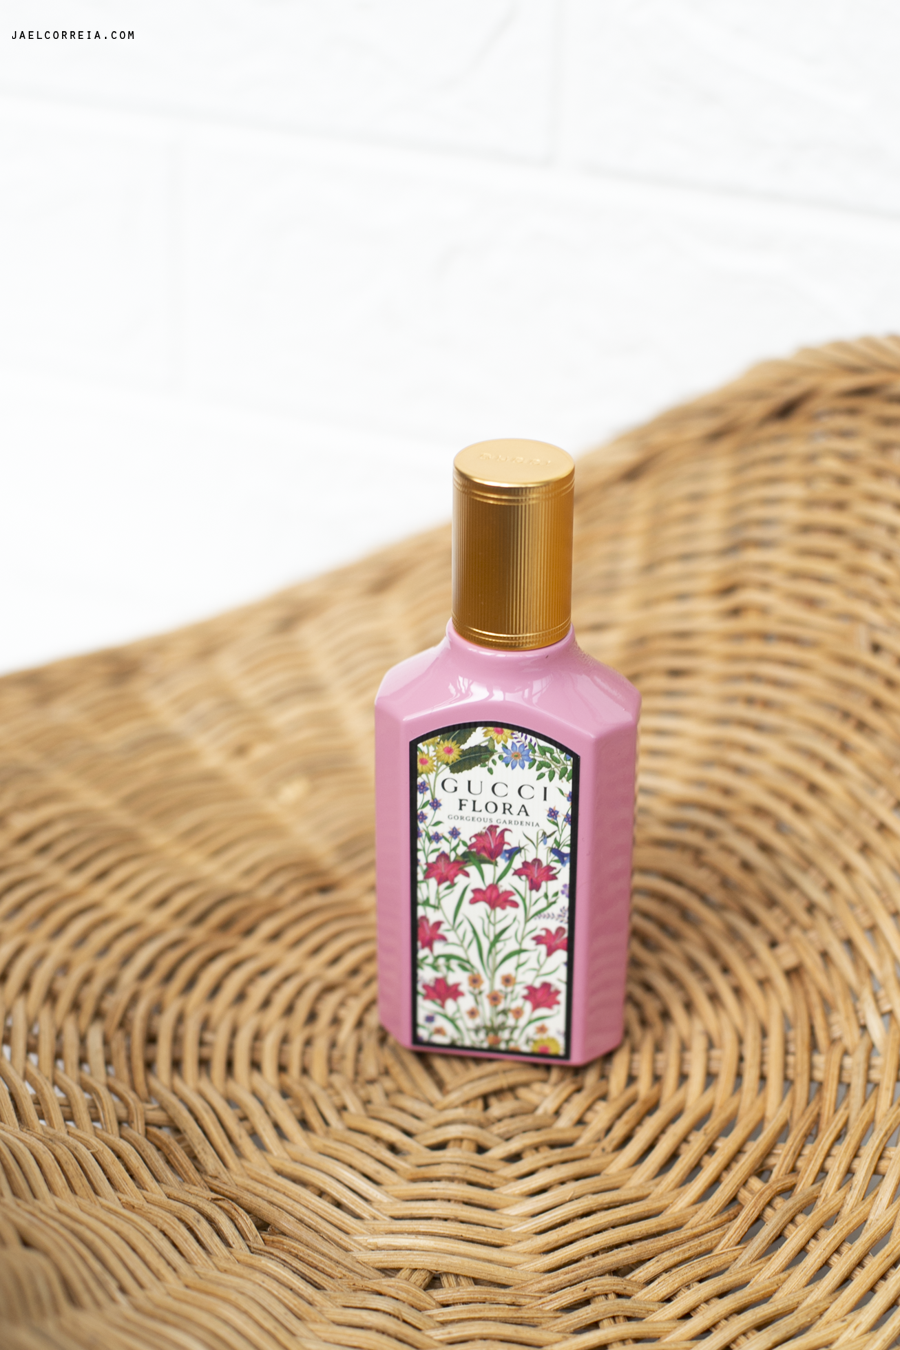 gucci flora gorgeous gardenia 2021 2022 new fragrance review  resenha portugal notino online store beauty novo perfume parfum  jael correia